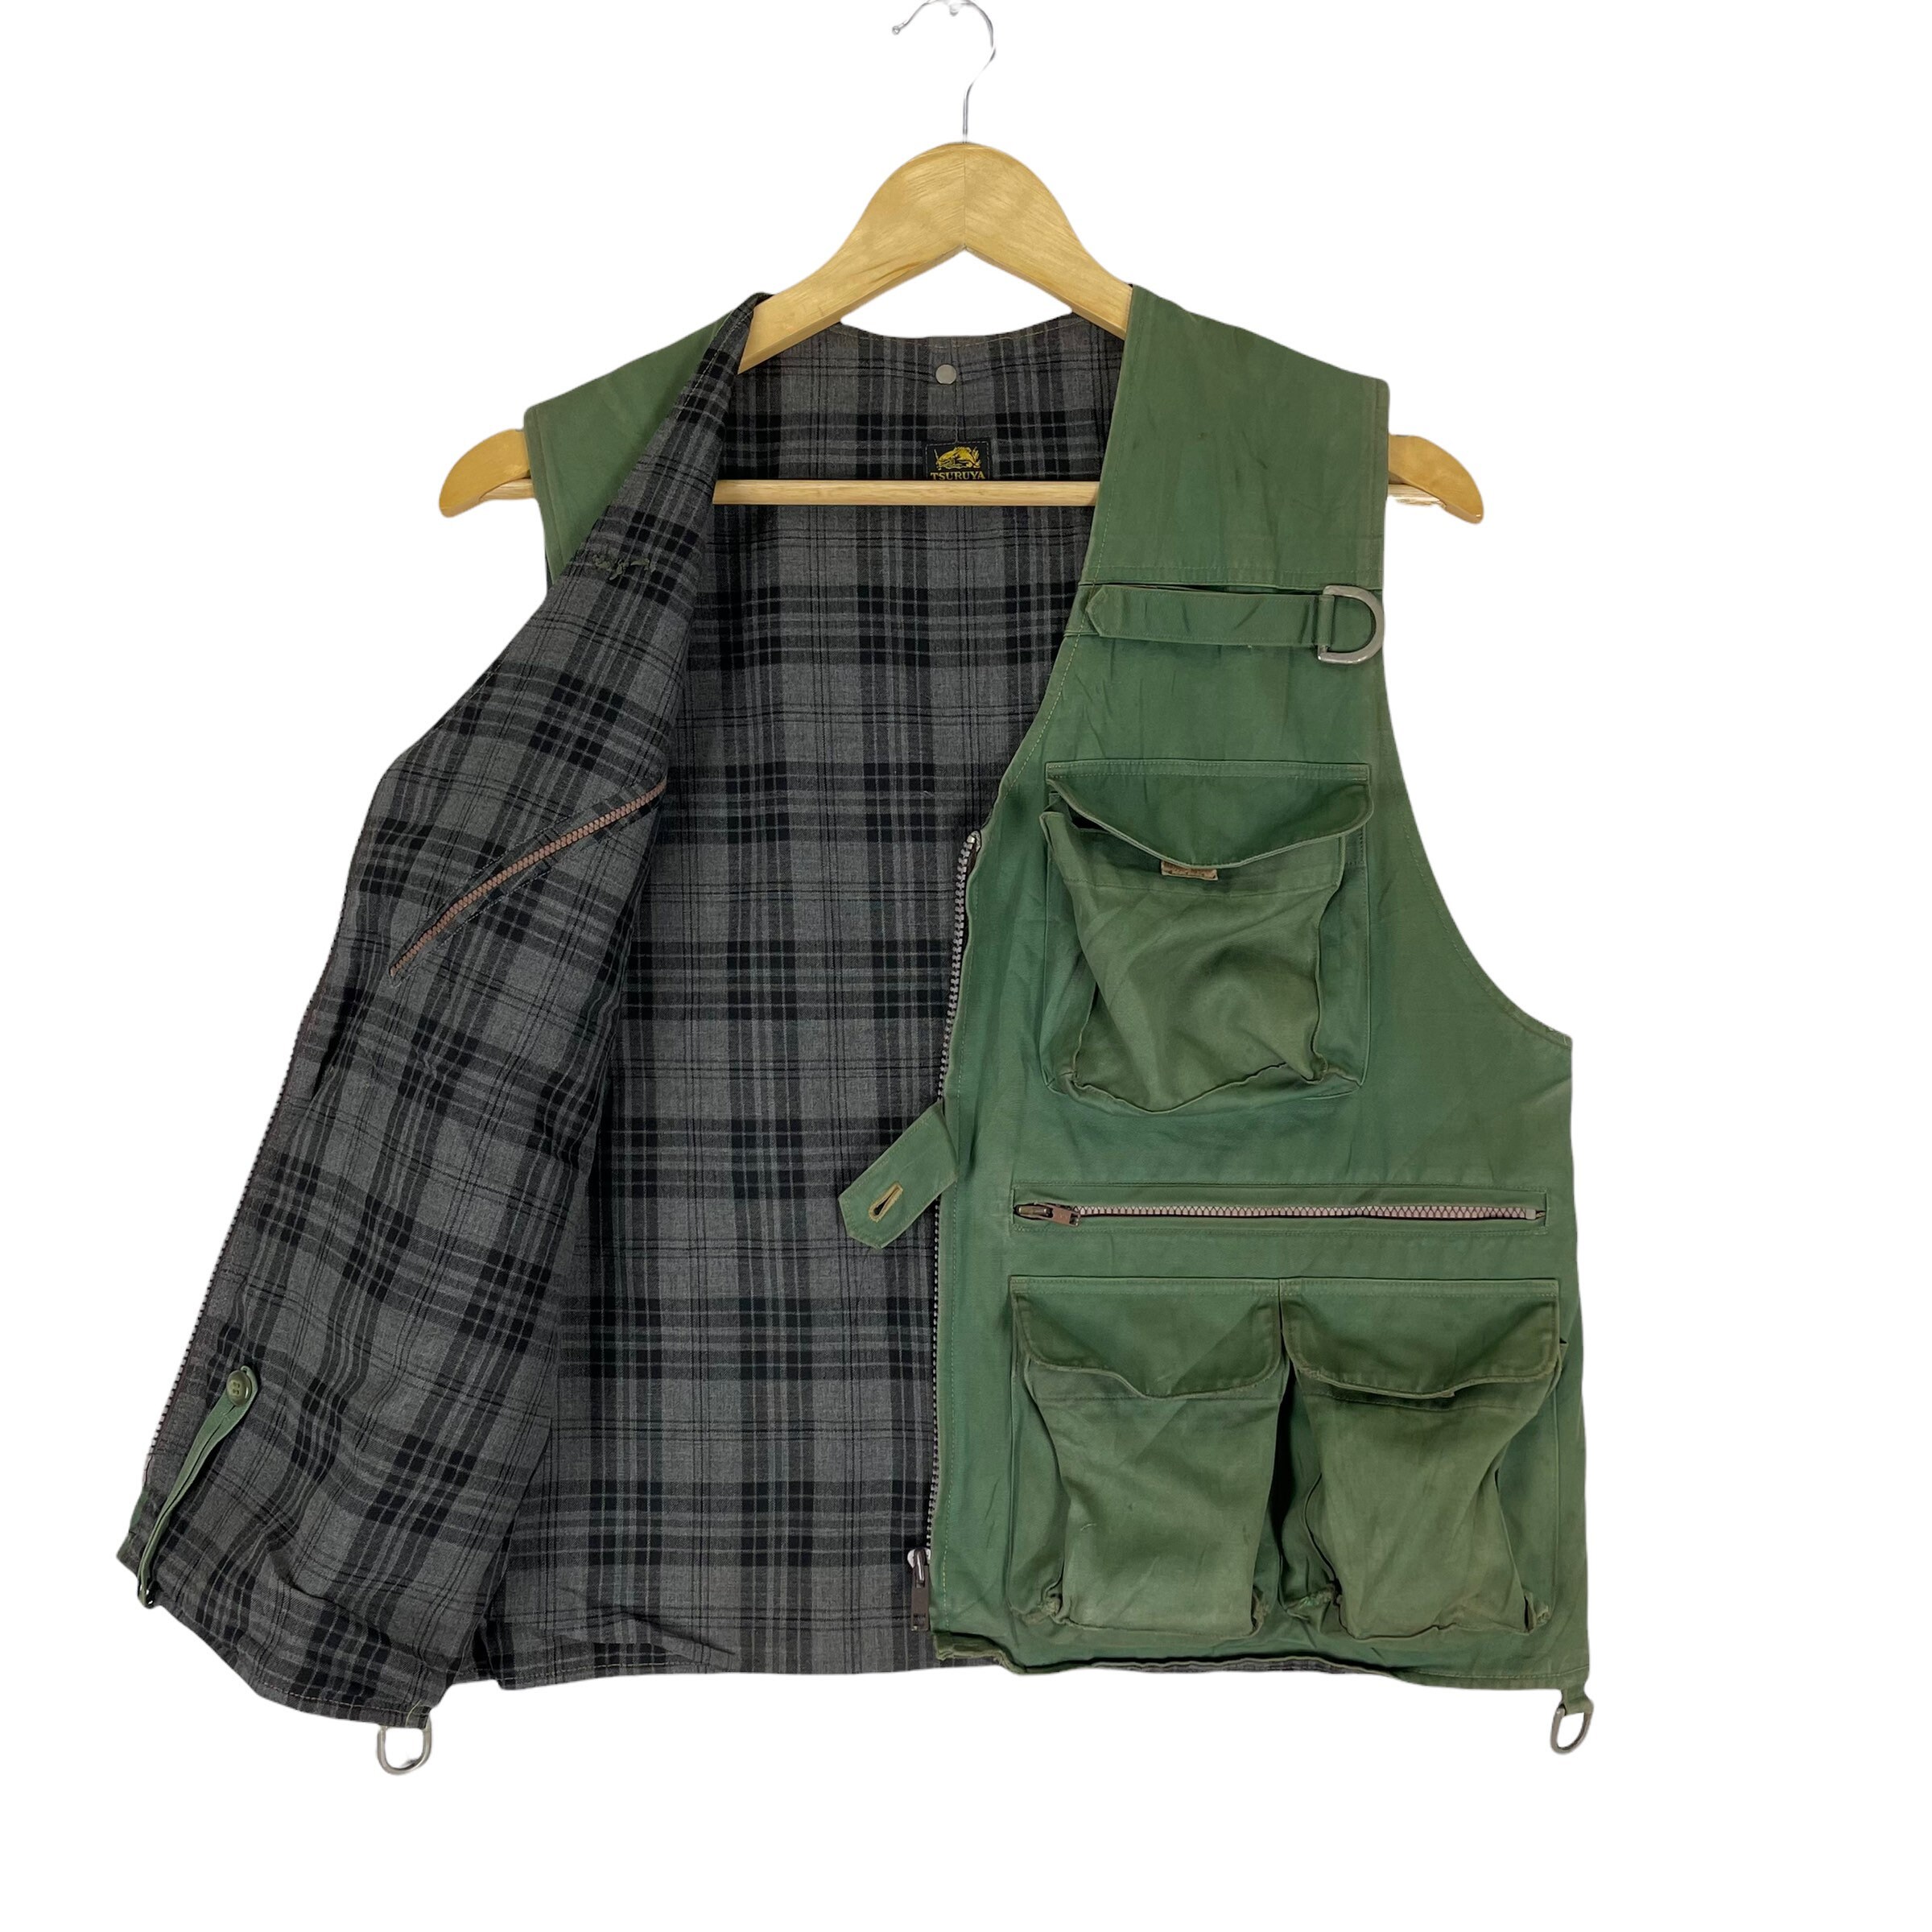 Tsuraya Fishing Gear Vest Multi Pocket Fishing Gear Tactical Green